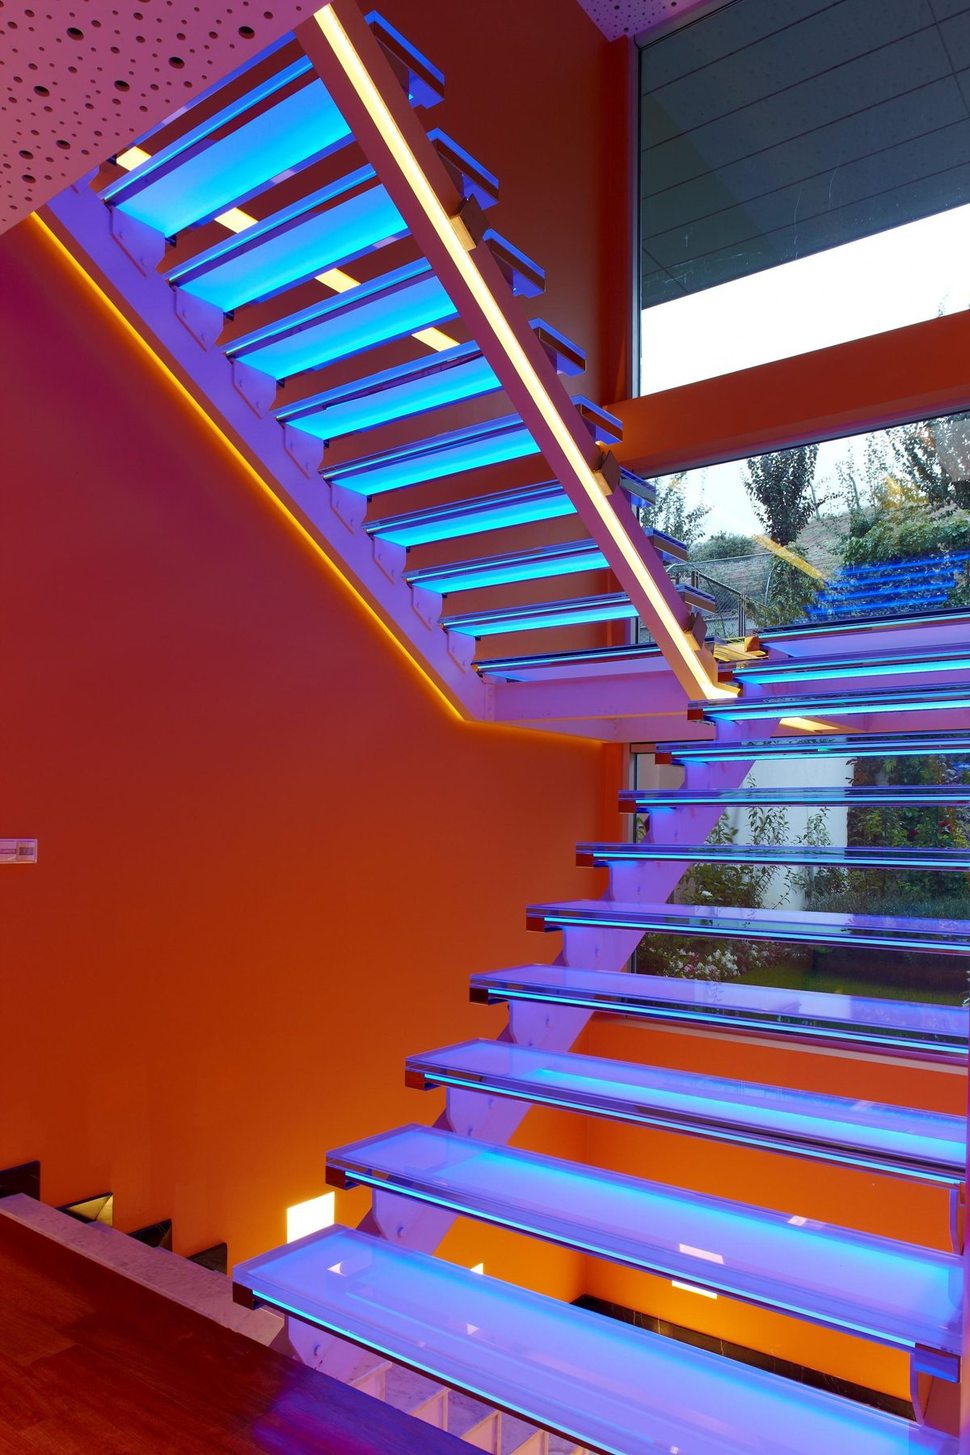 ultramodern-house-with-vibrant-lighting-design-focus-13-stairs-blue.jpg